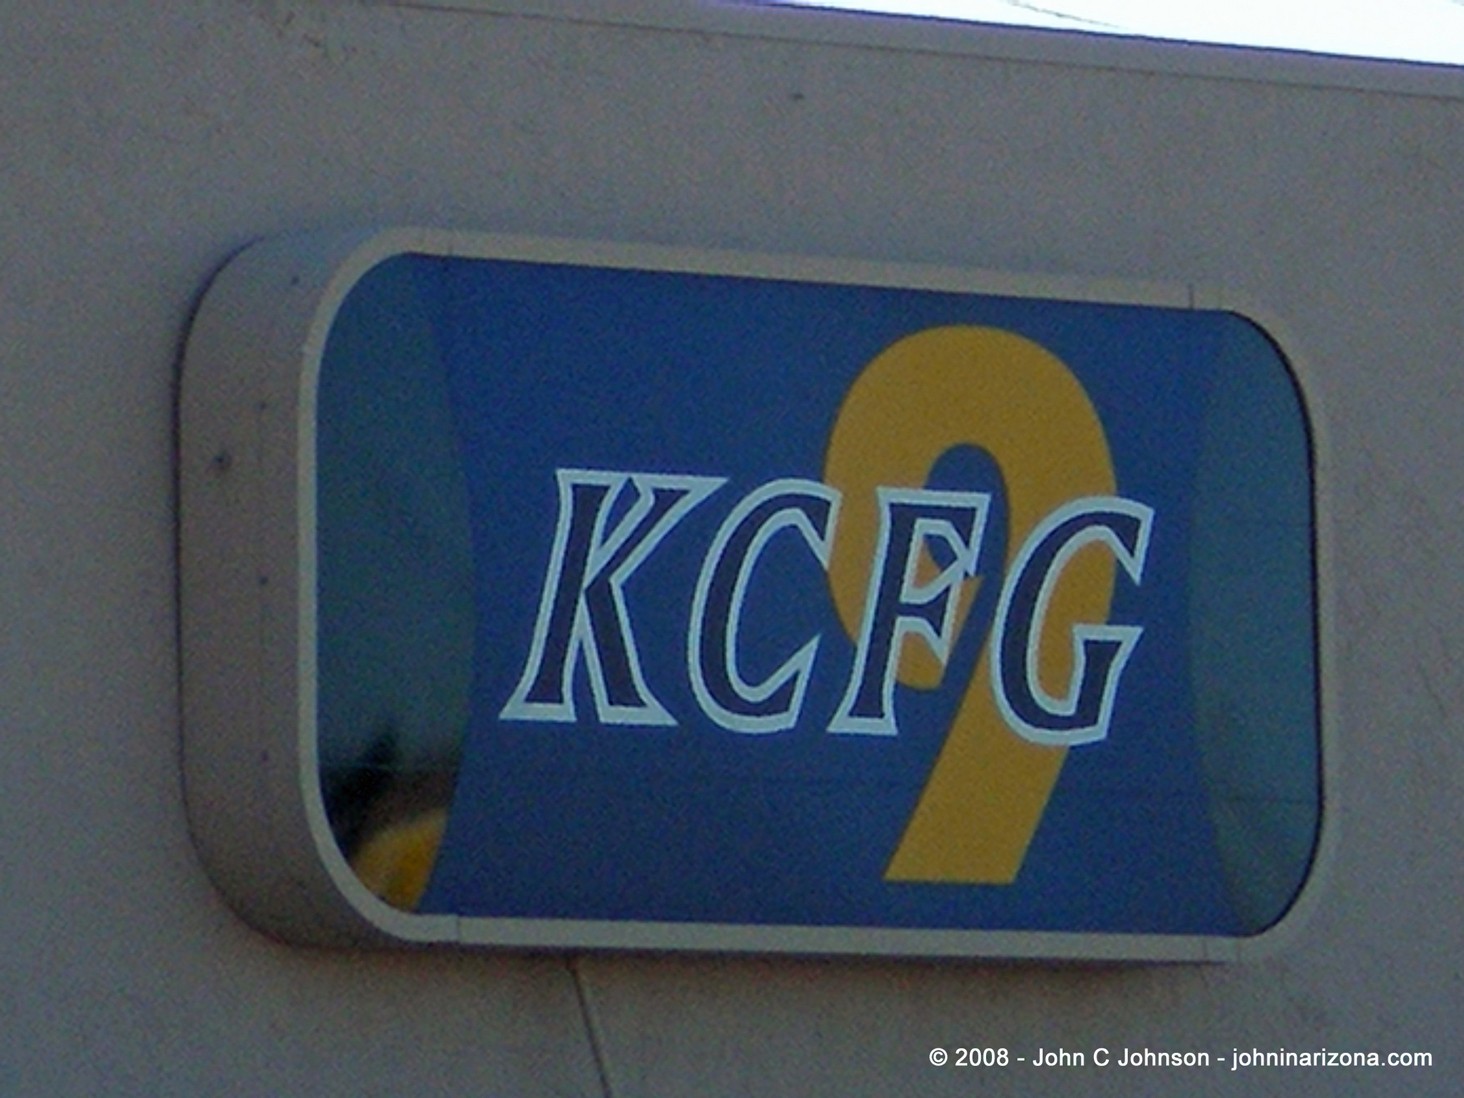 KCFG TV Channel 9 Flagstaff, Arizona